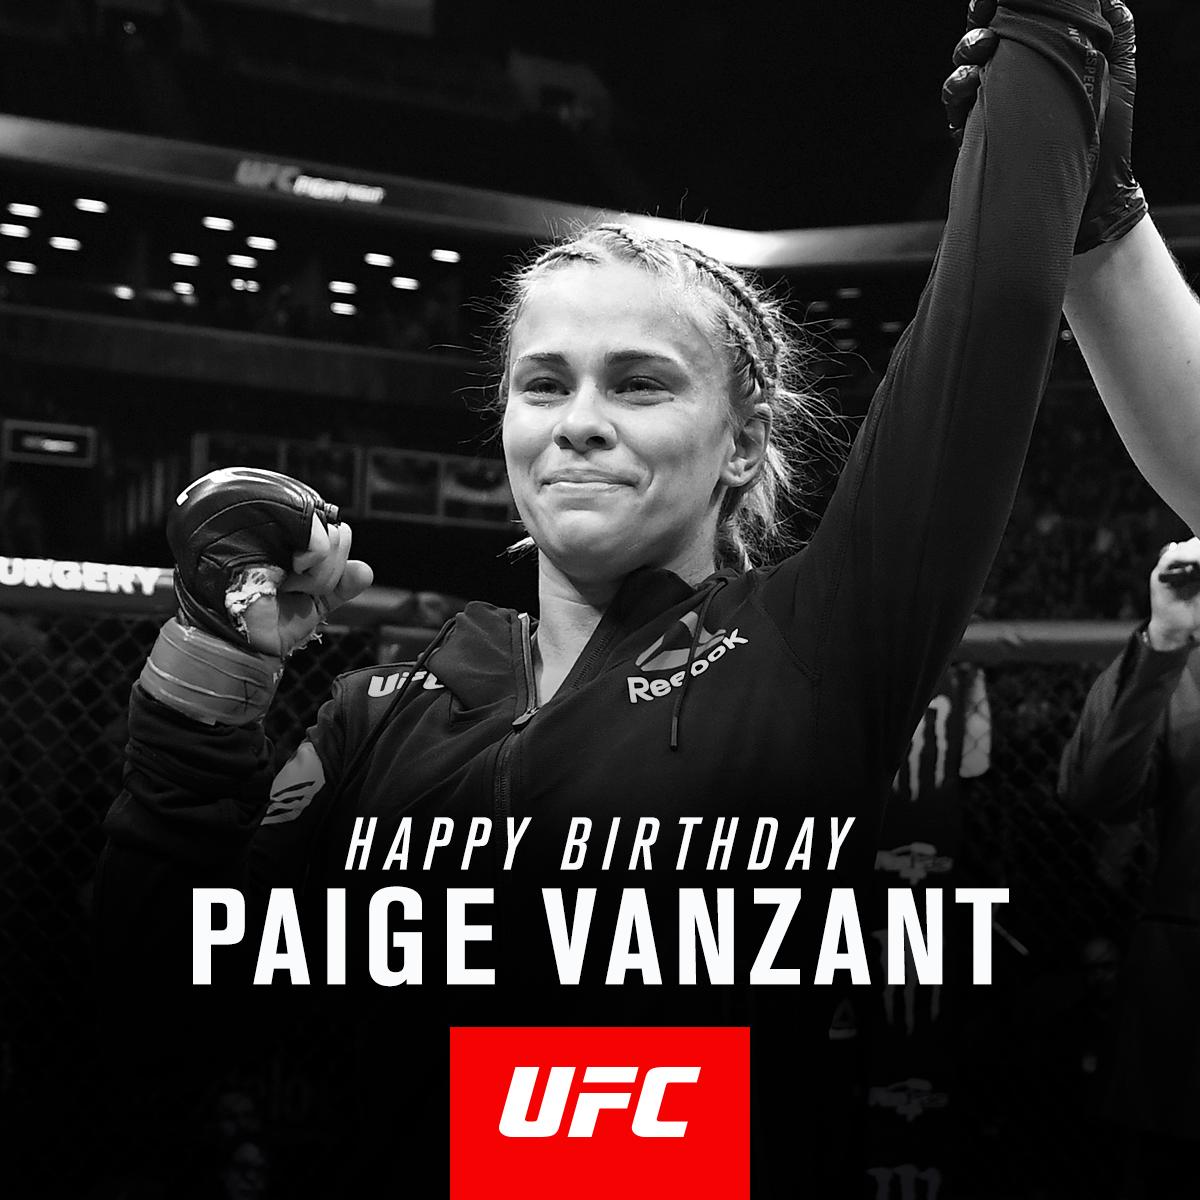 RT @ufc: Wish @PaigeVanZant a Happy Birthday today! ???? https://t.co/b7IuspZBdE